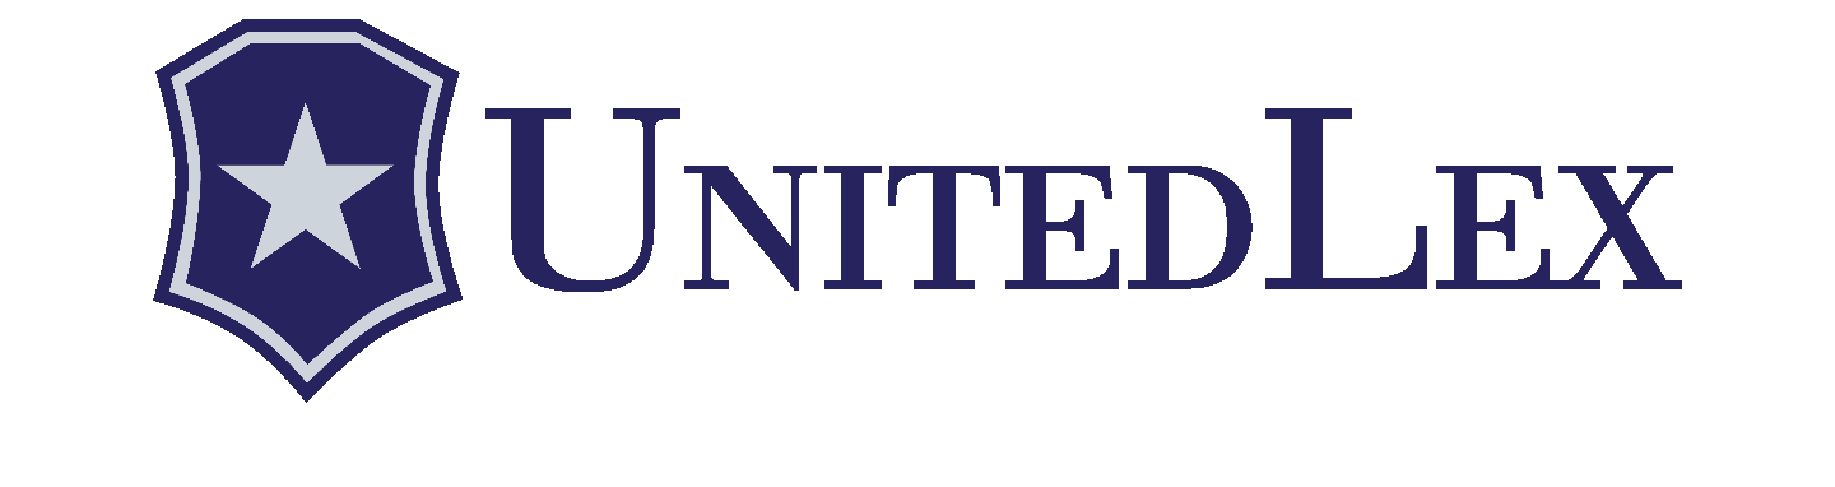 UnitedLex-logo-Final.png